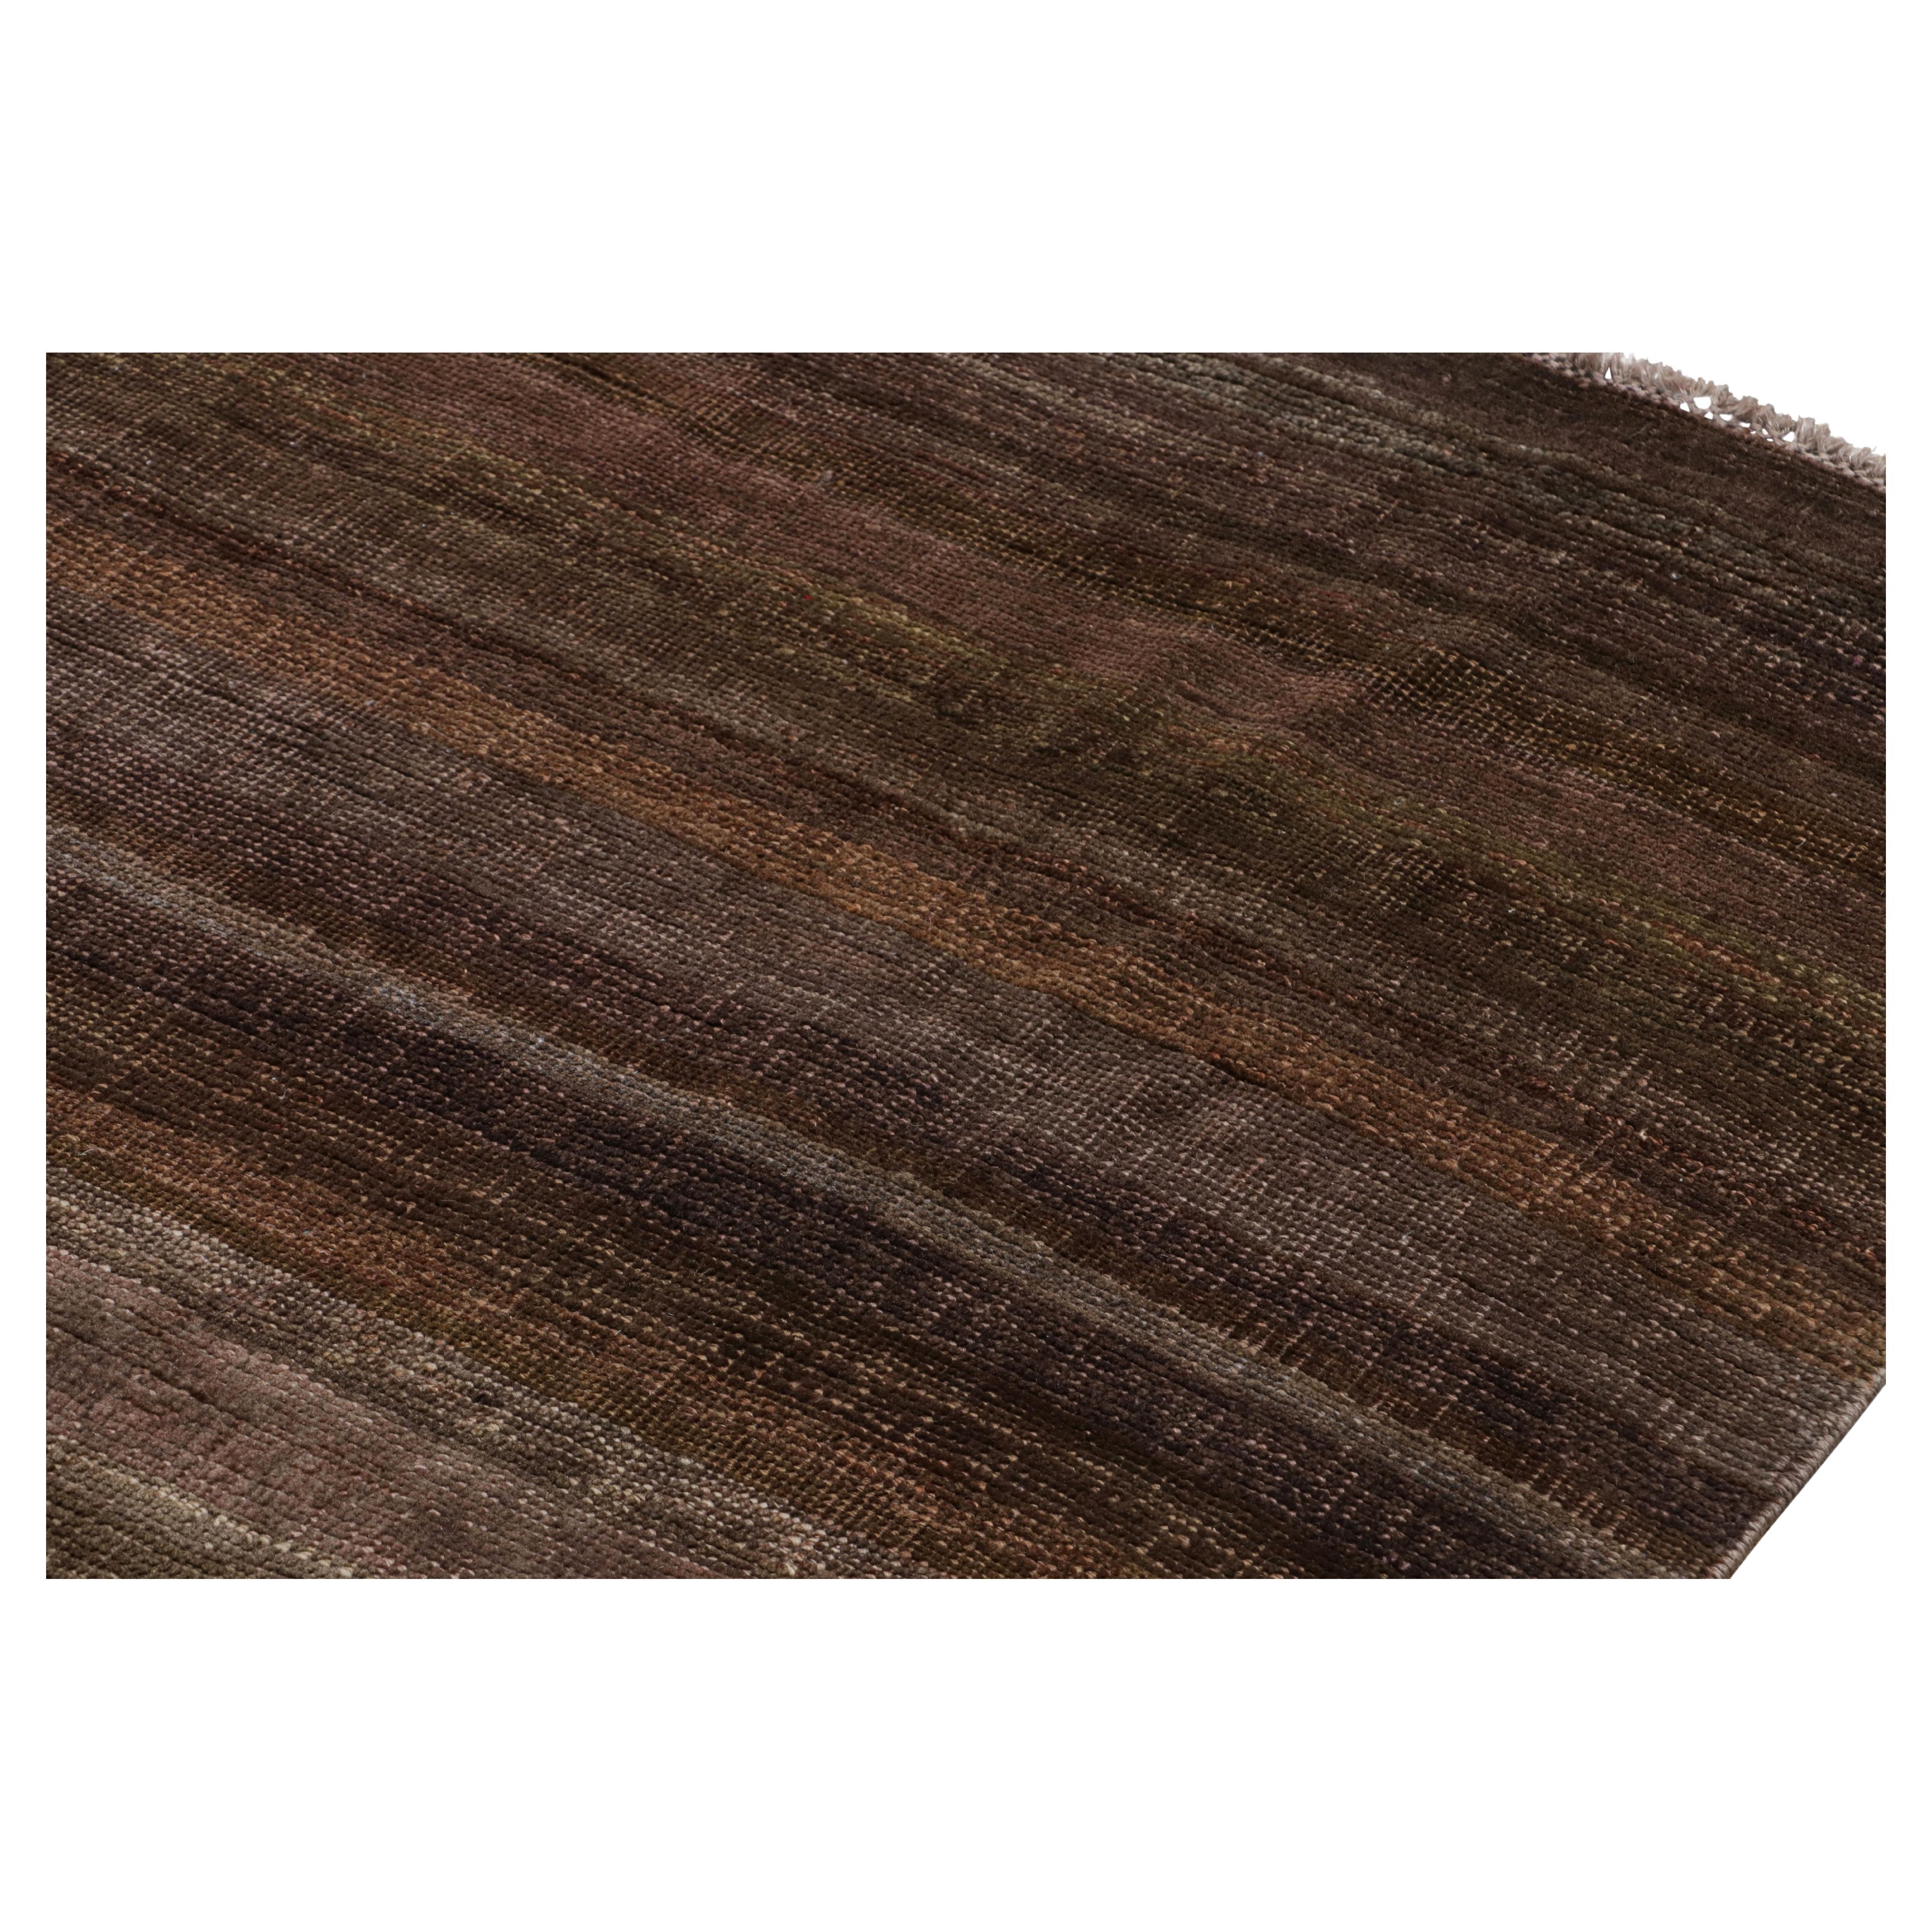 Rug & Kilim's Modern Modern Textural Rug in Brown and Purple Stripes and Striae (Tapis à rayures et à bandes marron et violet)